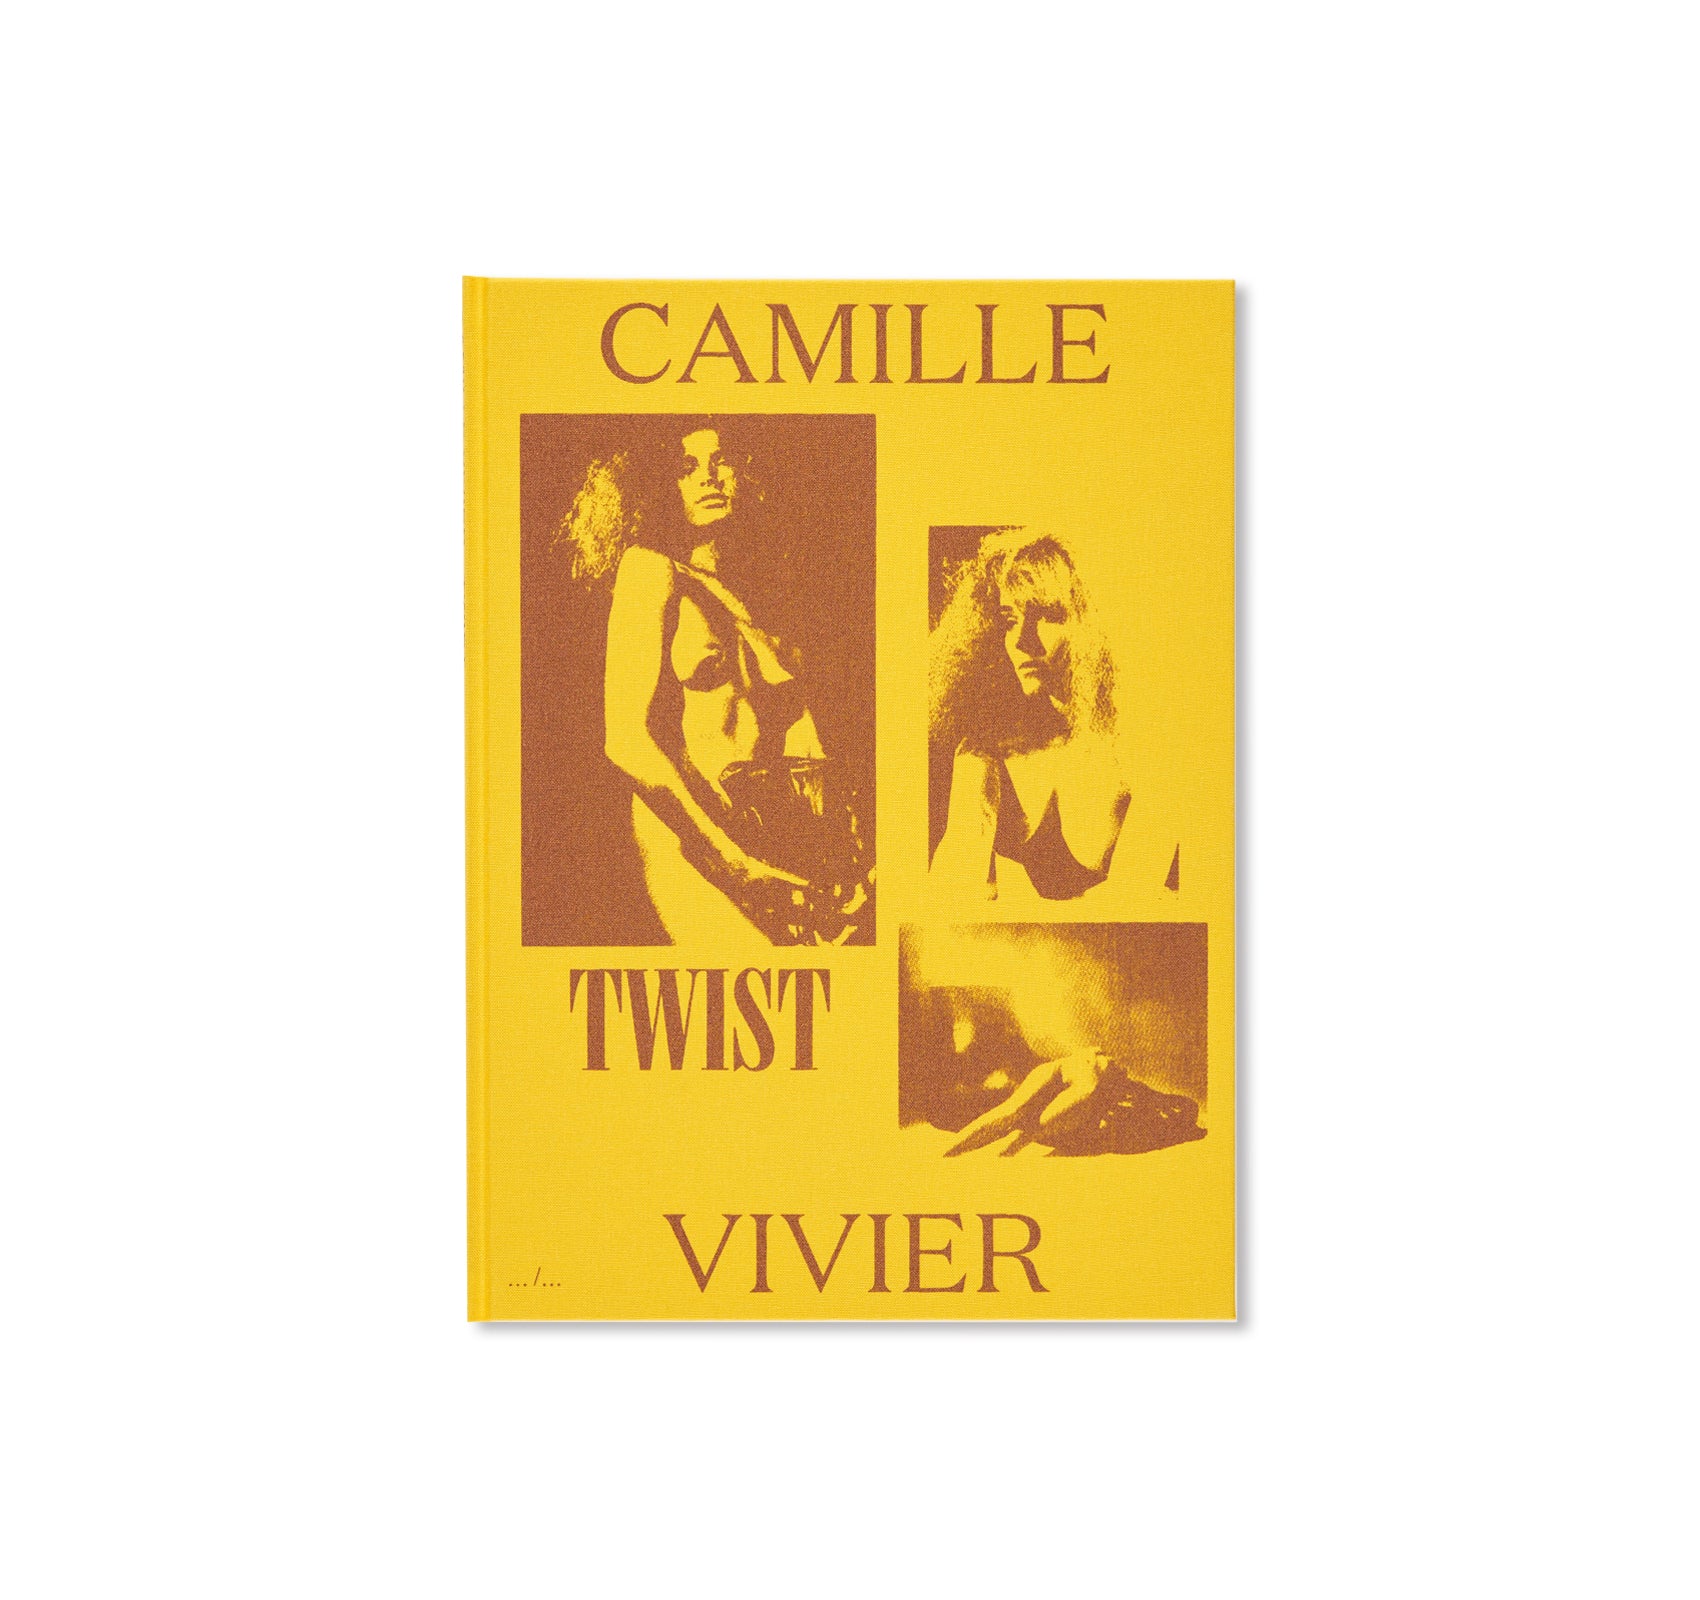 TWIST by Camille Vivier